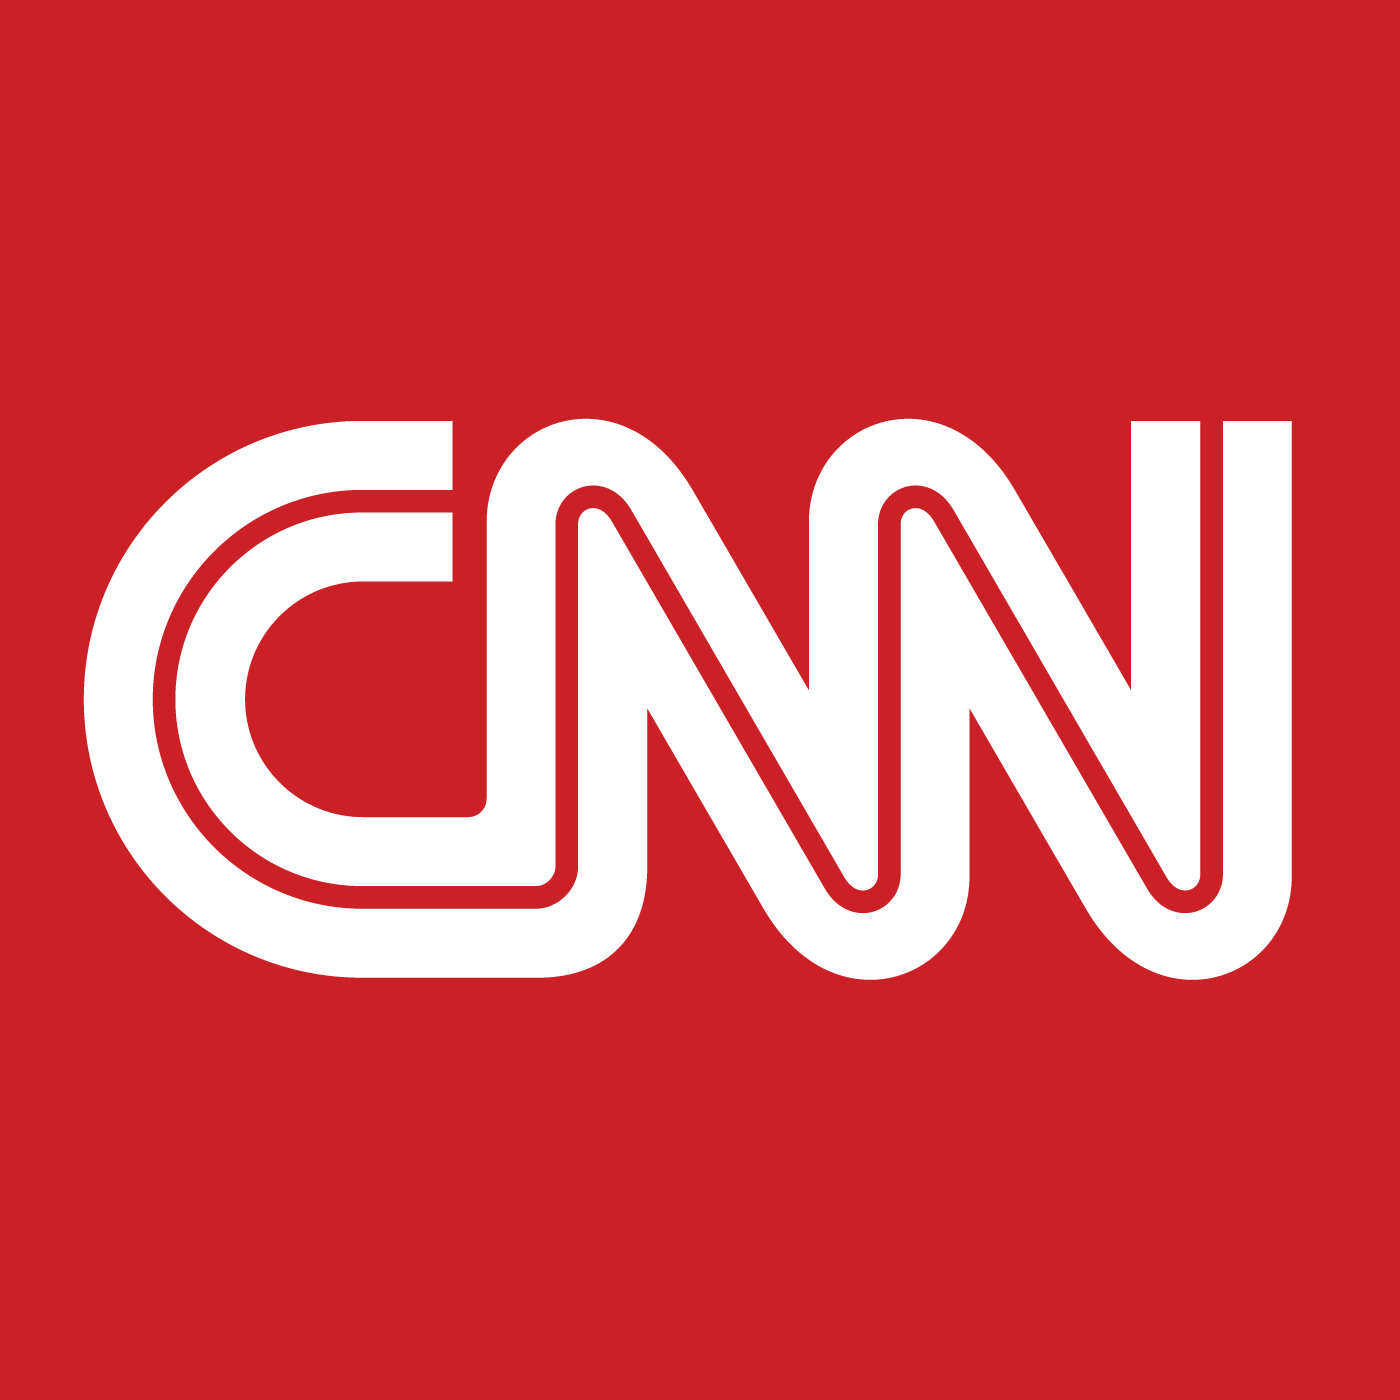 cnn-logo-square.png